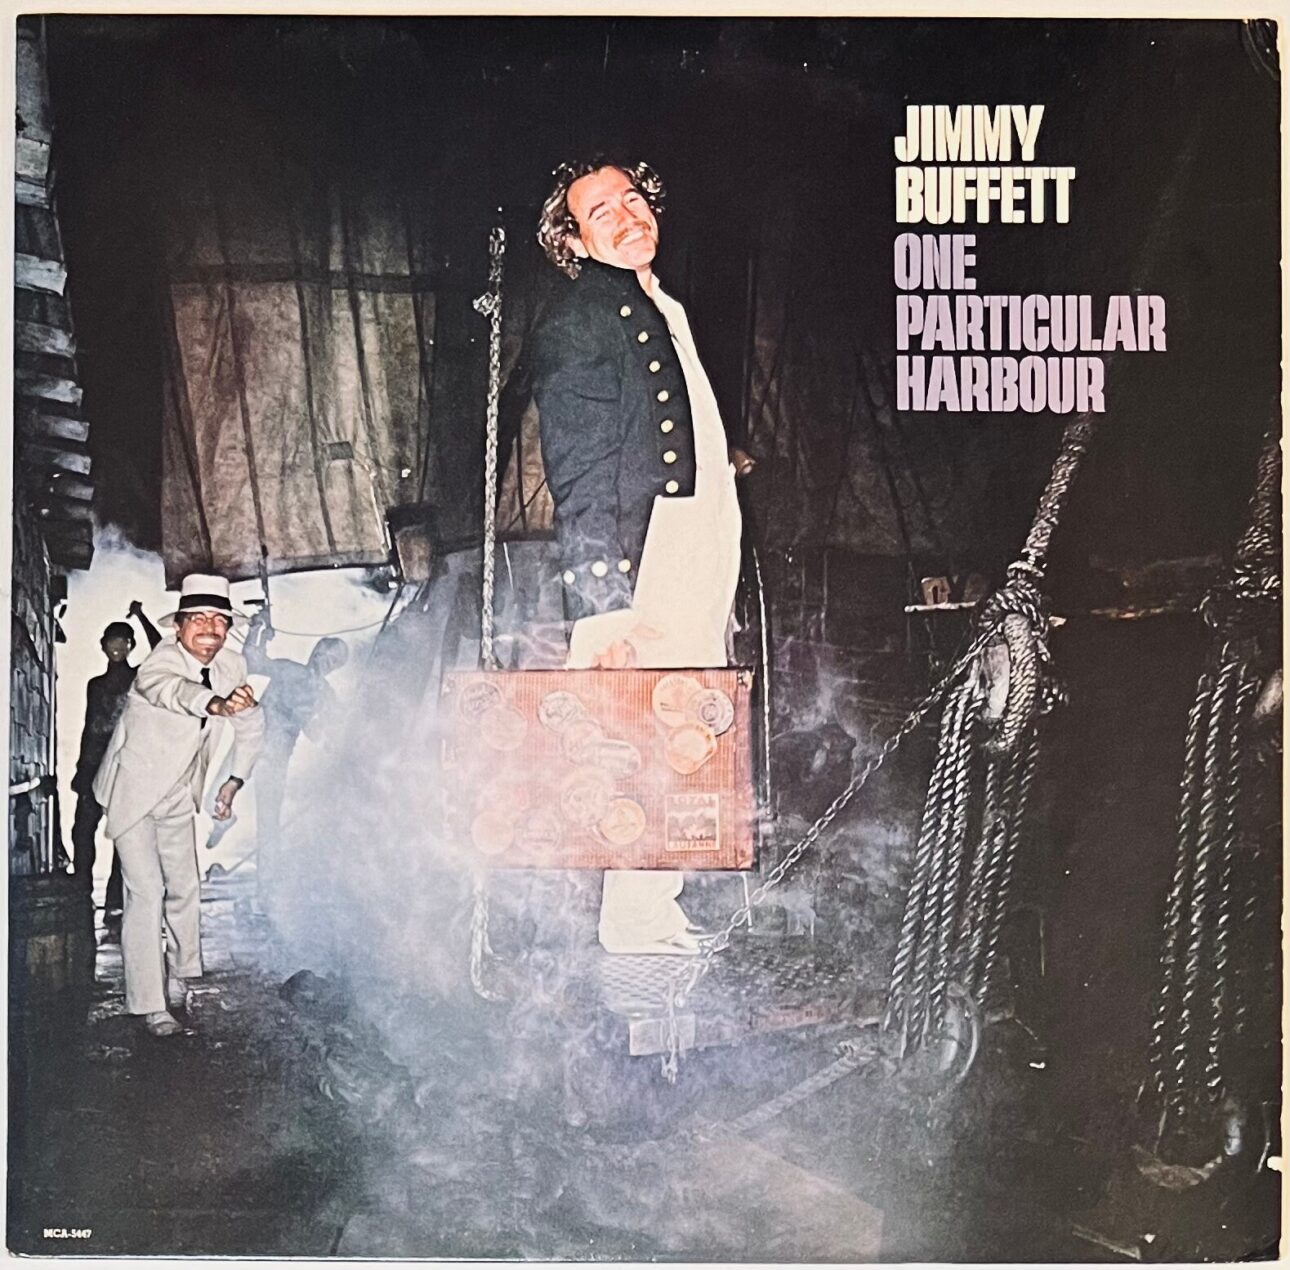 Jimmy Buffett One Particular Harbor